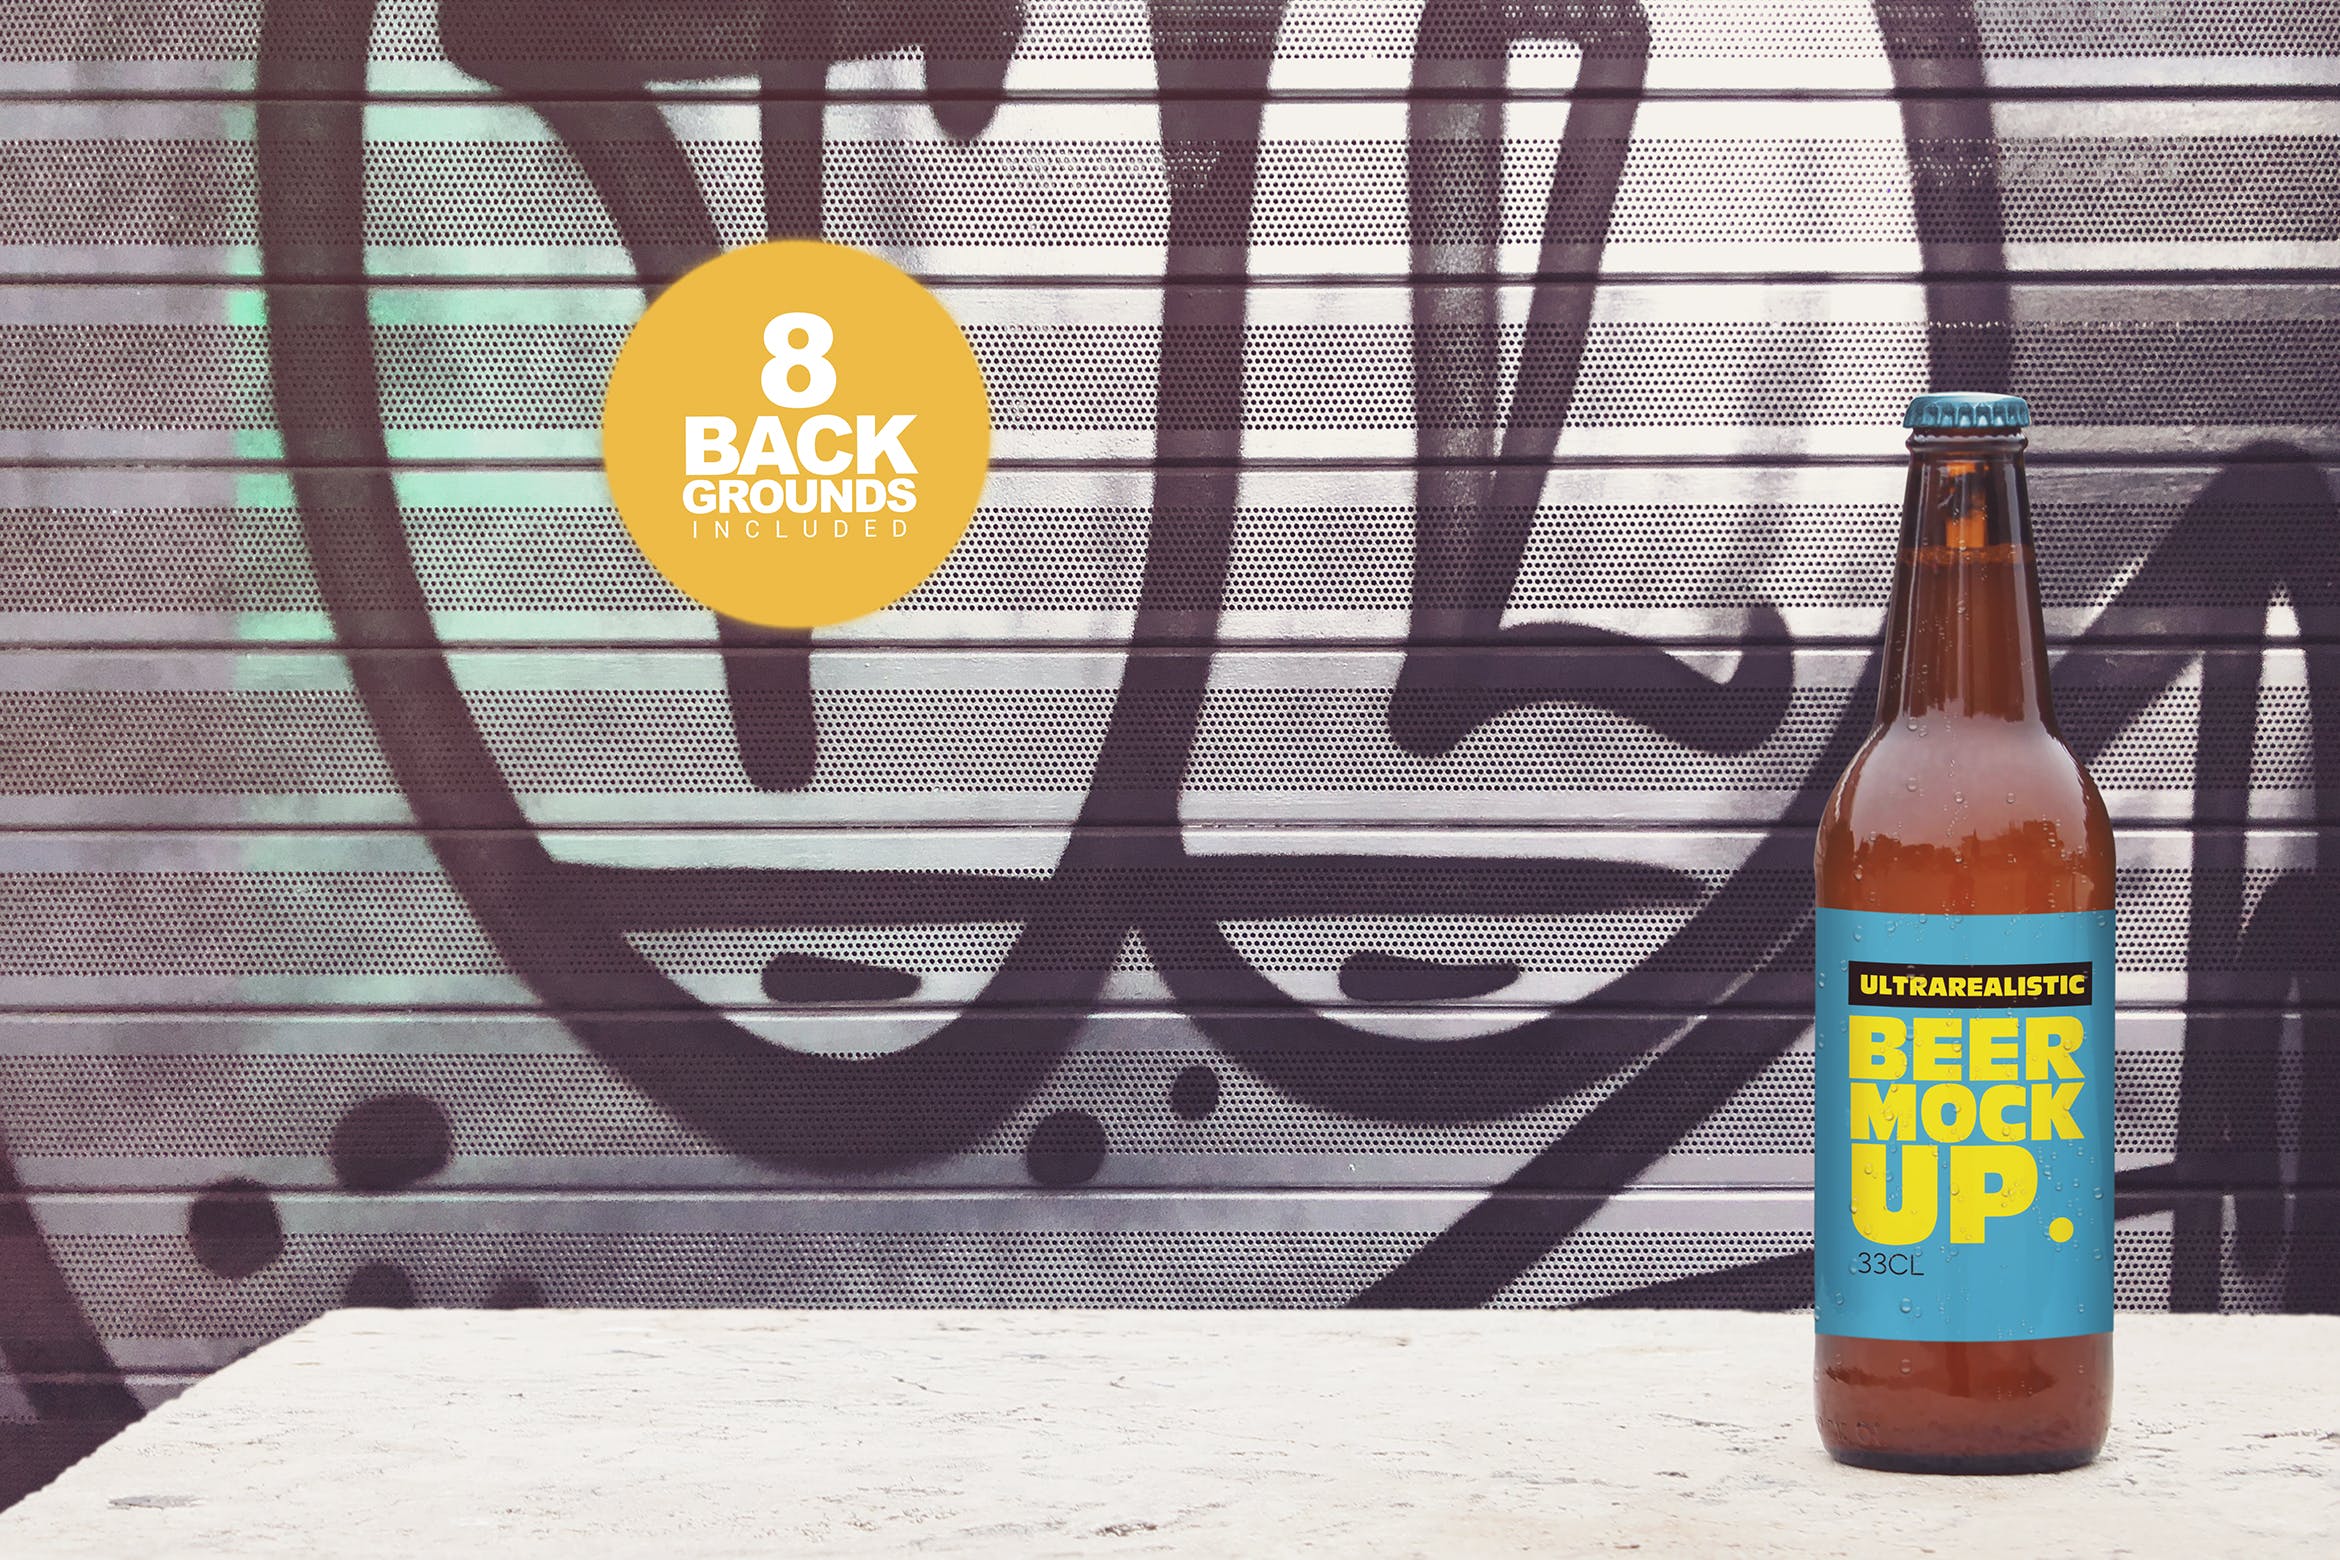 50cl啤酒瓶外观设计预览16图库精选 50cl Garage Beer Mockup插图